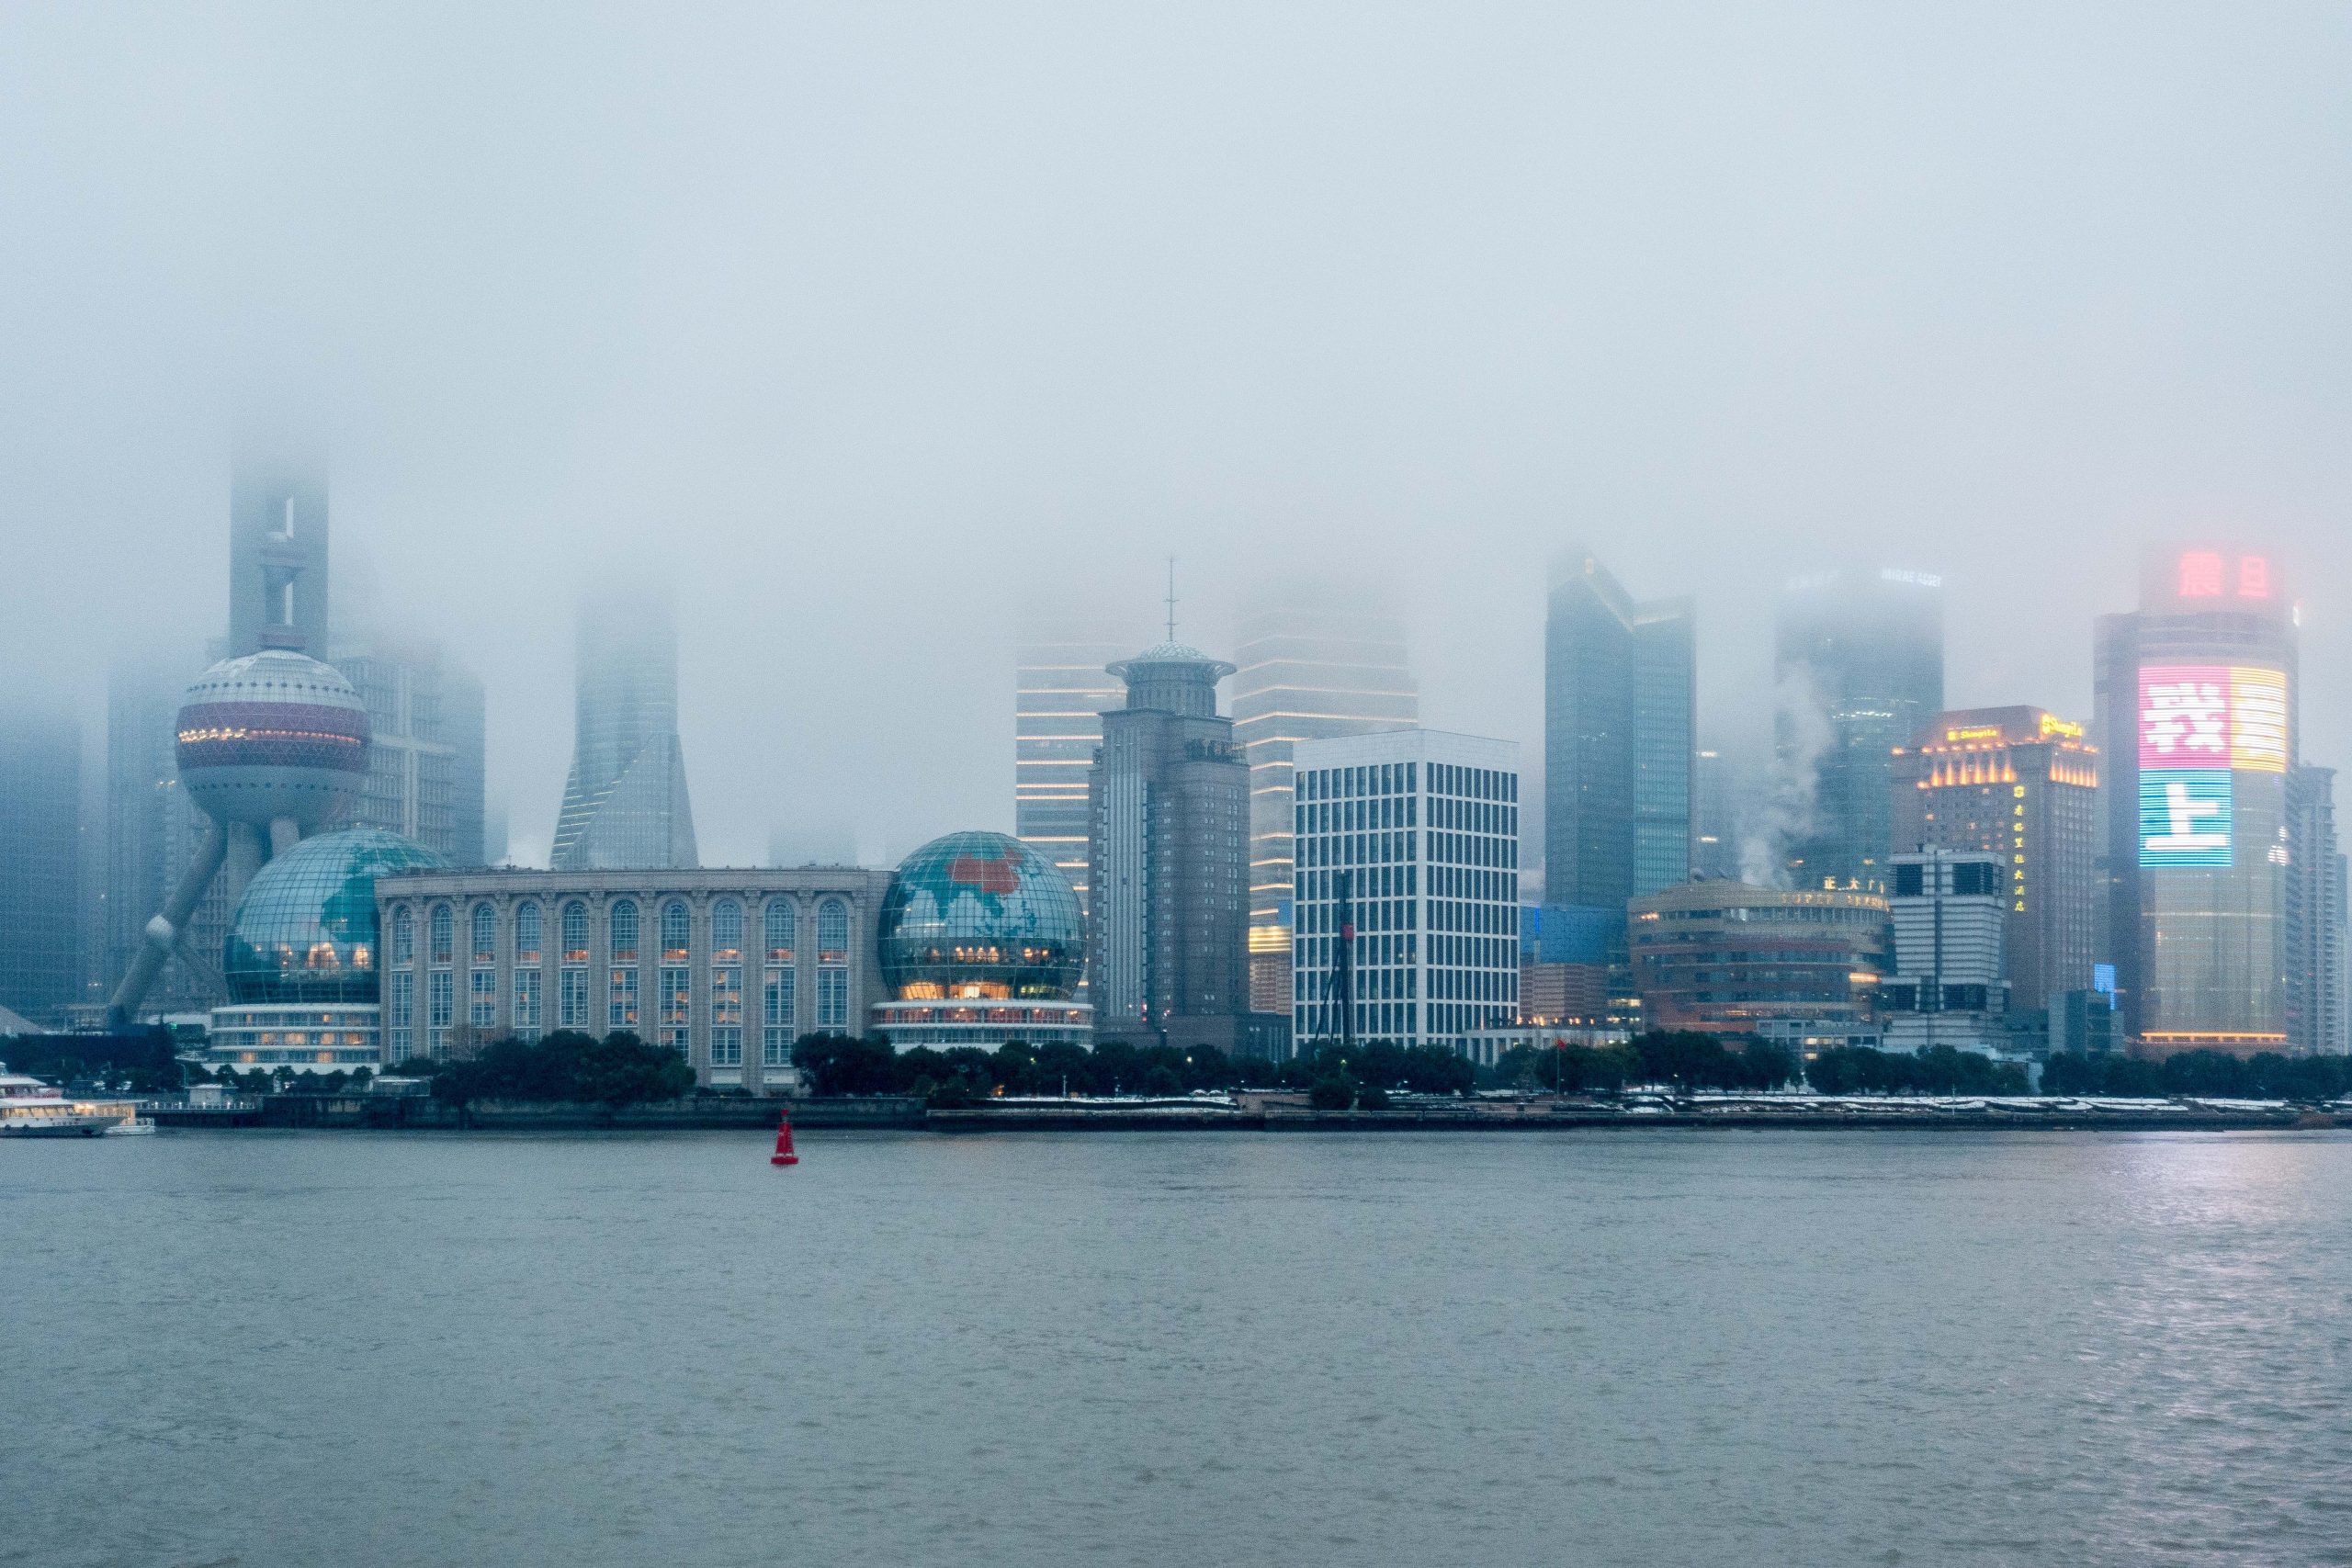 China: Looking Through The Haze